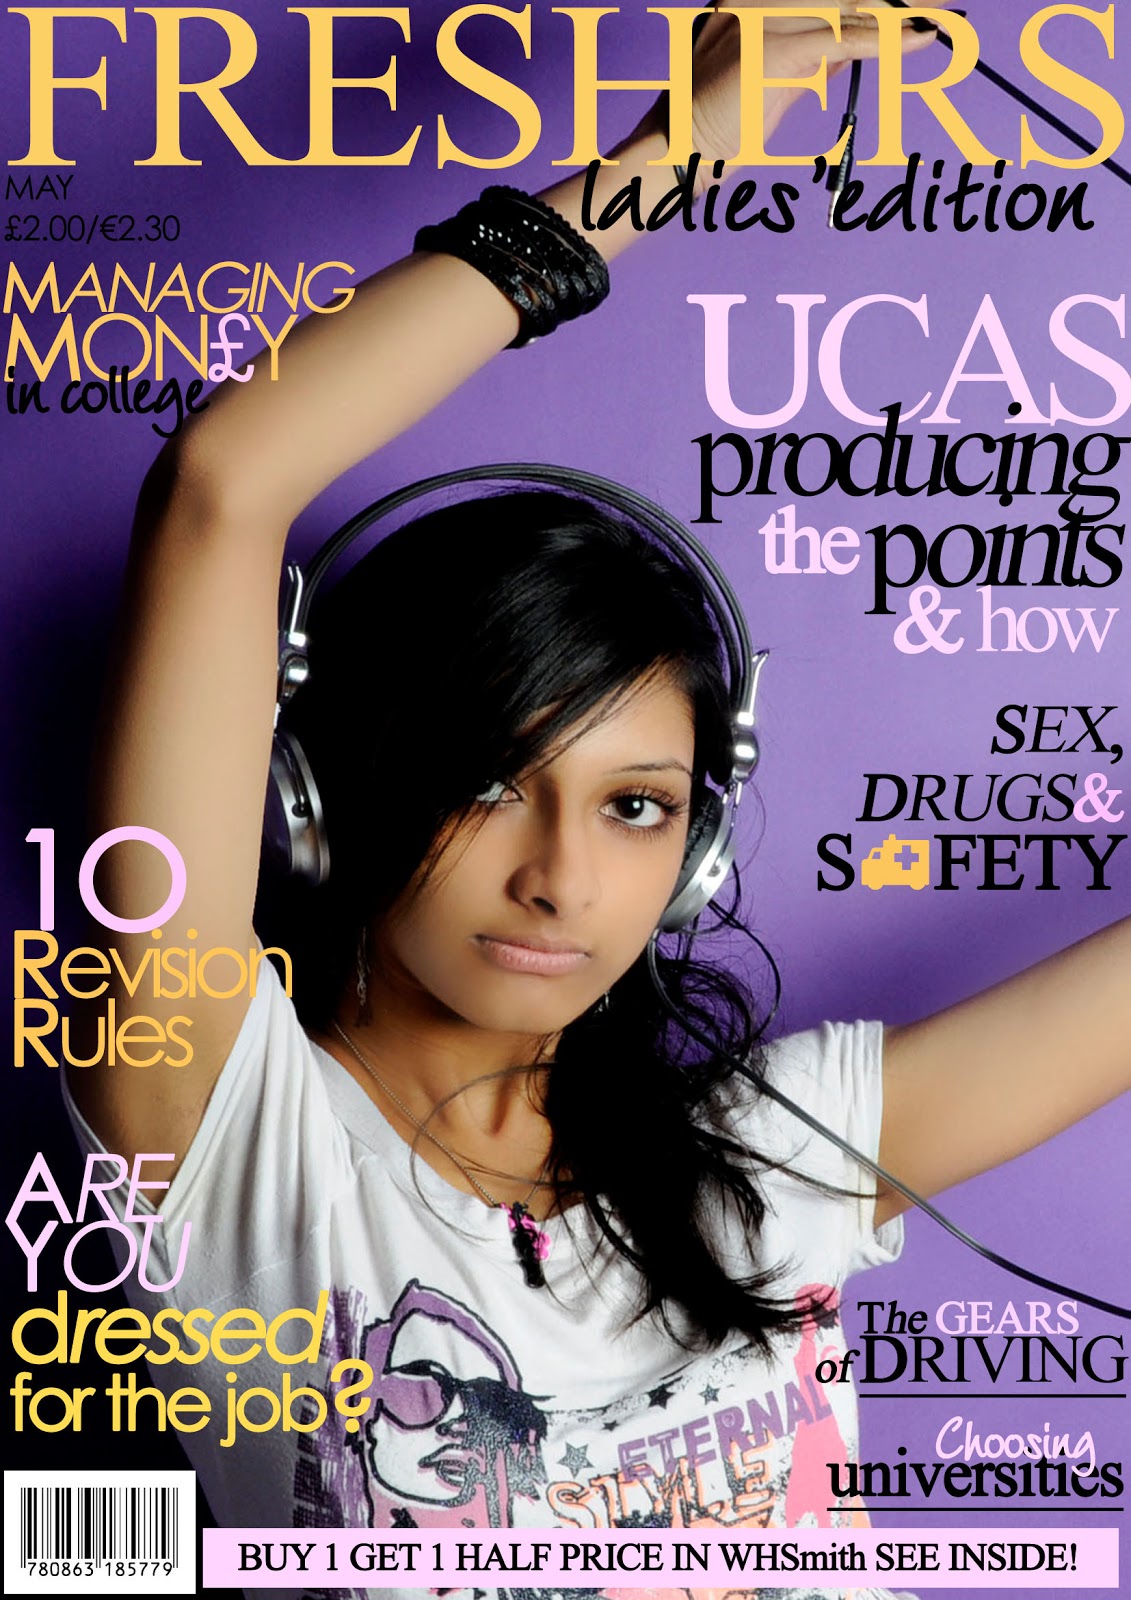 Media Blog: College magazine cover examples